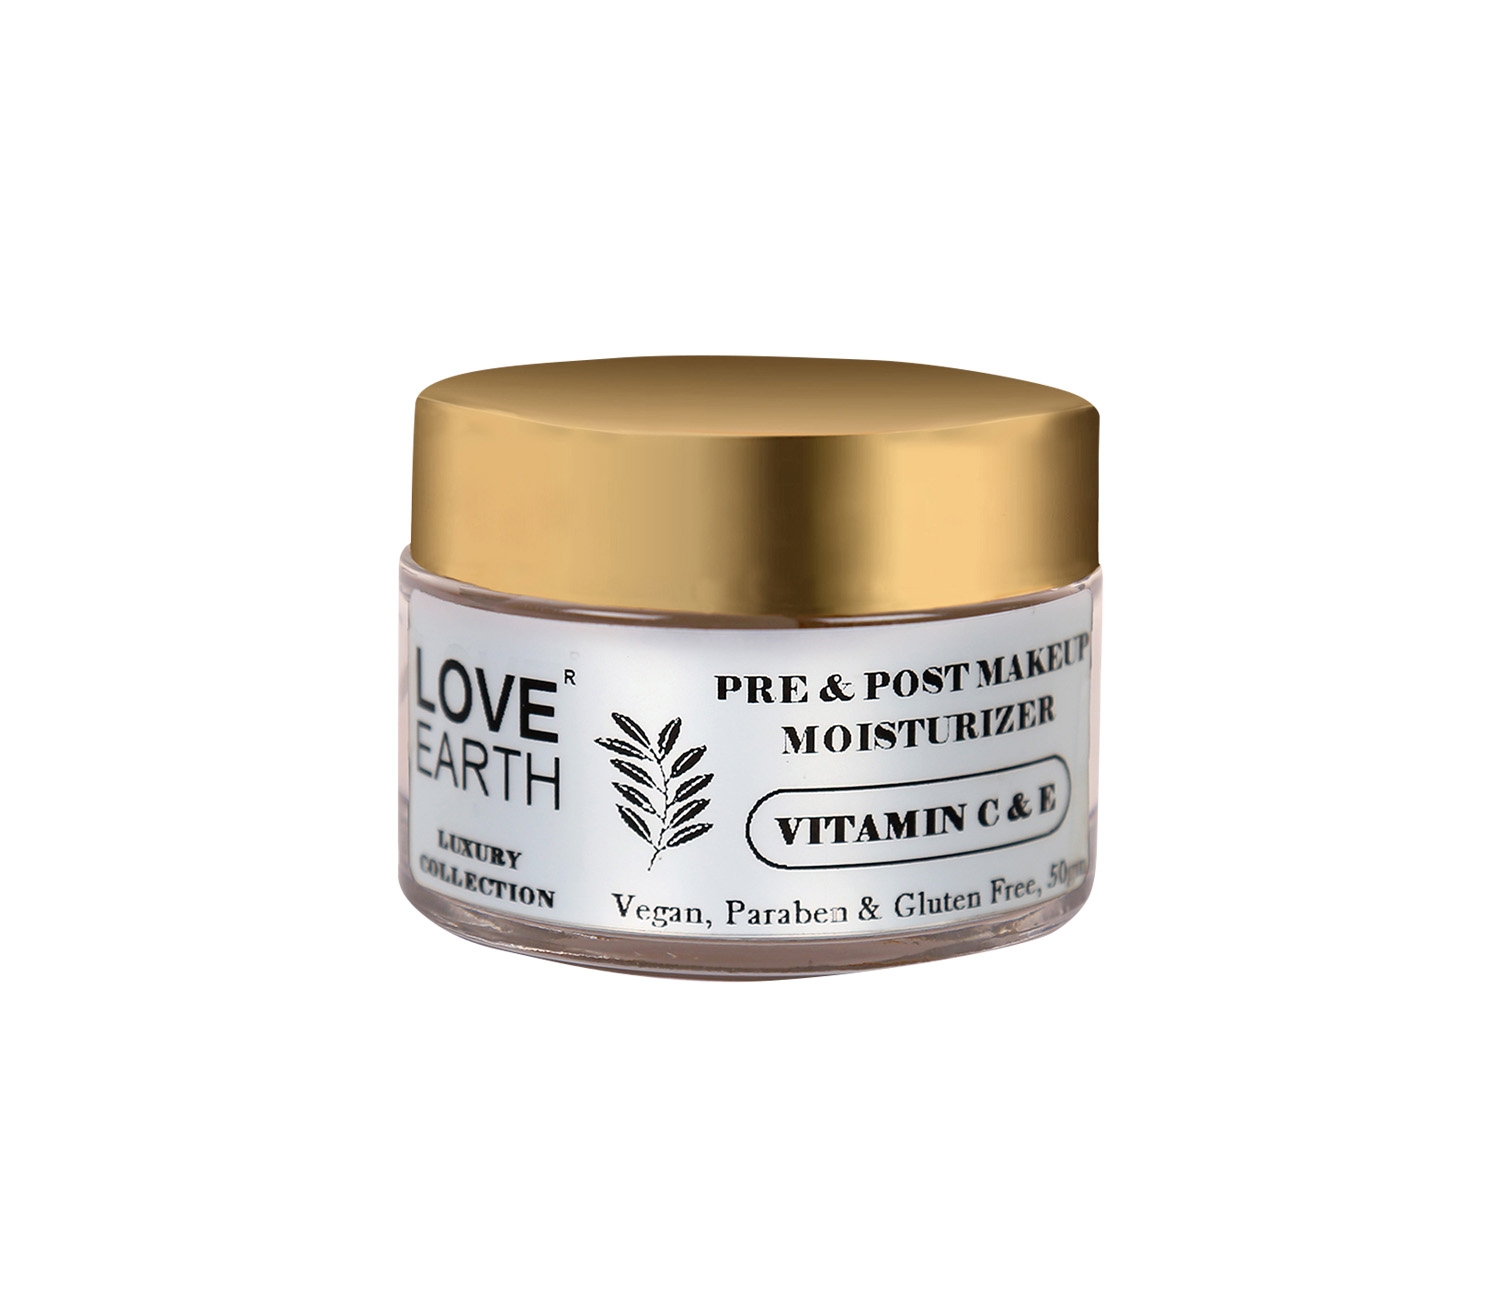 LOVE EARTH | Love Earth Pre & Post Makeup Face Moisturizer with Lemon Peel Extracts & Jojoba Oil for Skin Hydration & Moisturizing 50gm 0